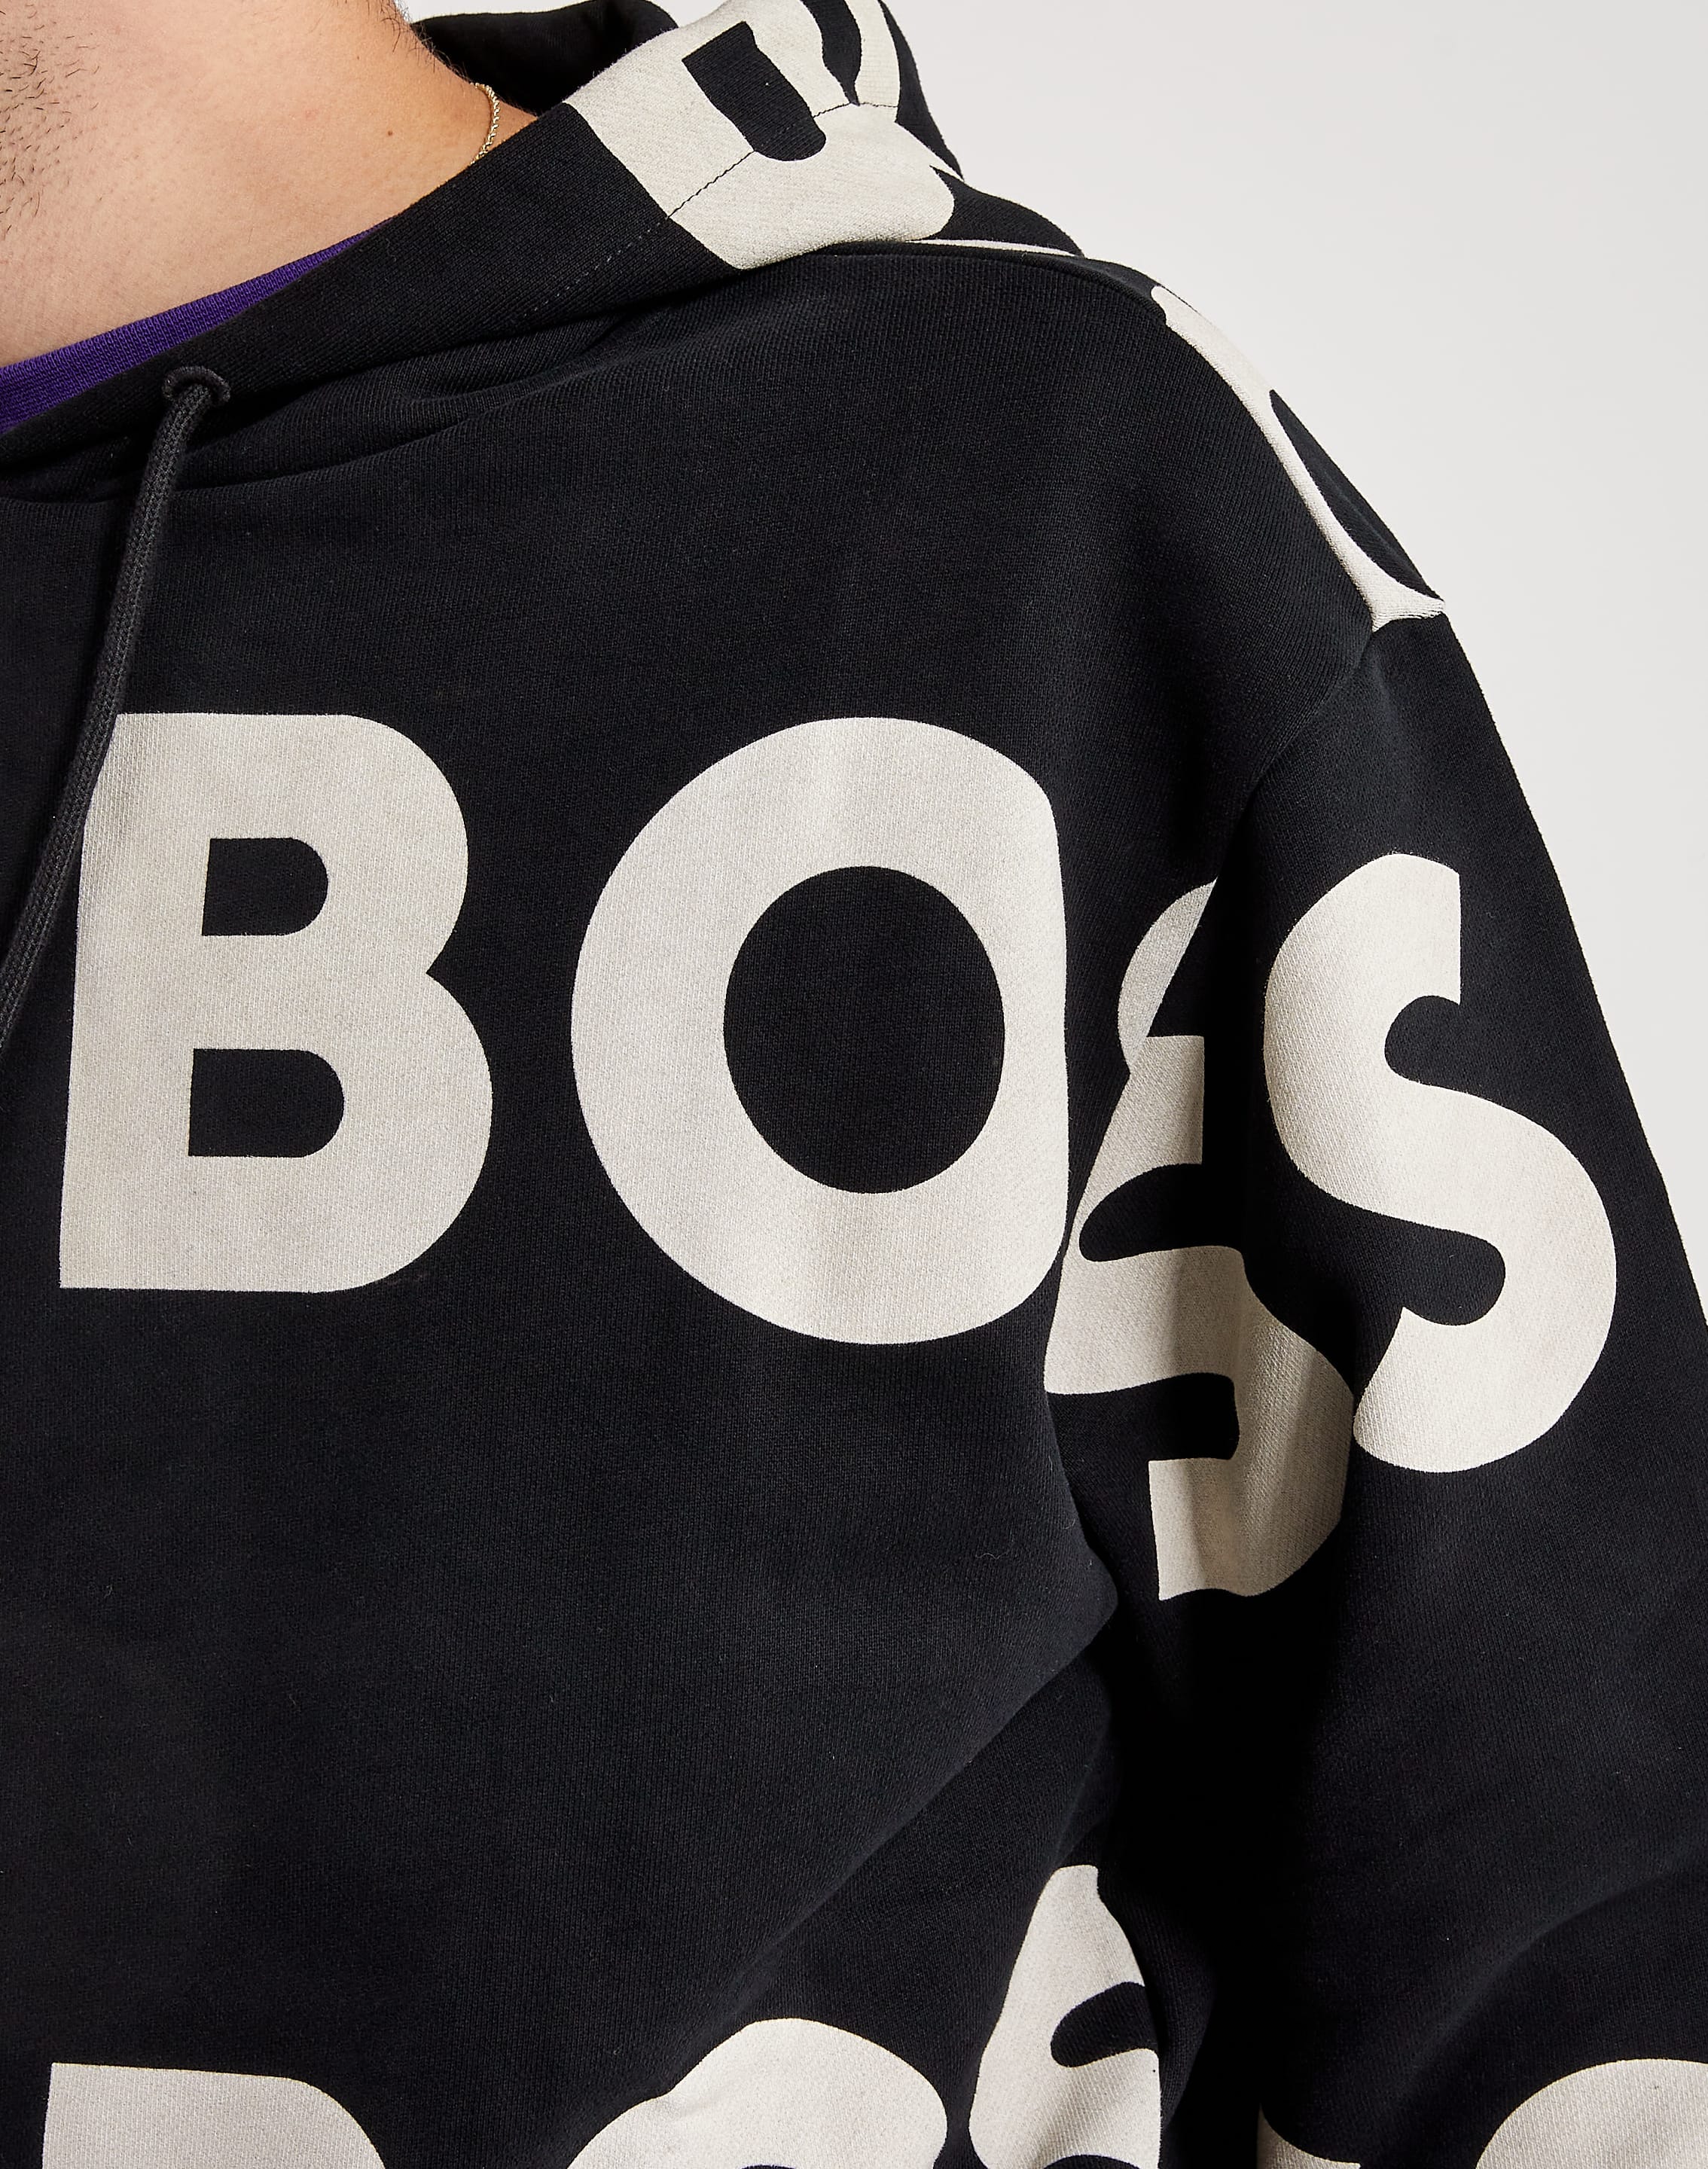 Pit Boss® Logo Hoody - Black